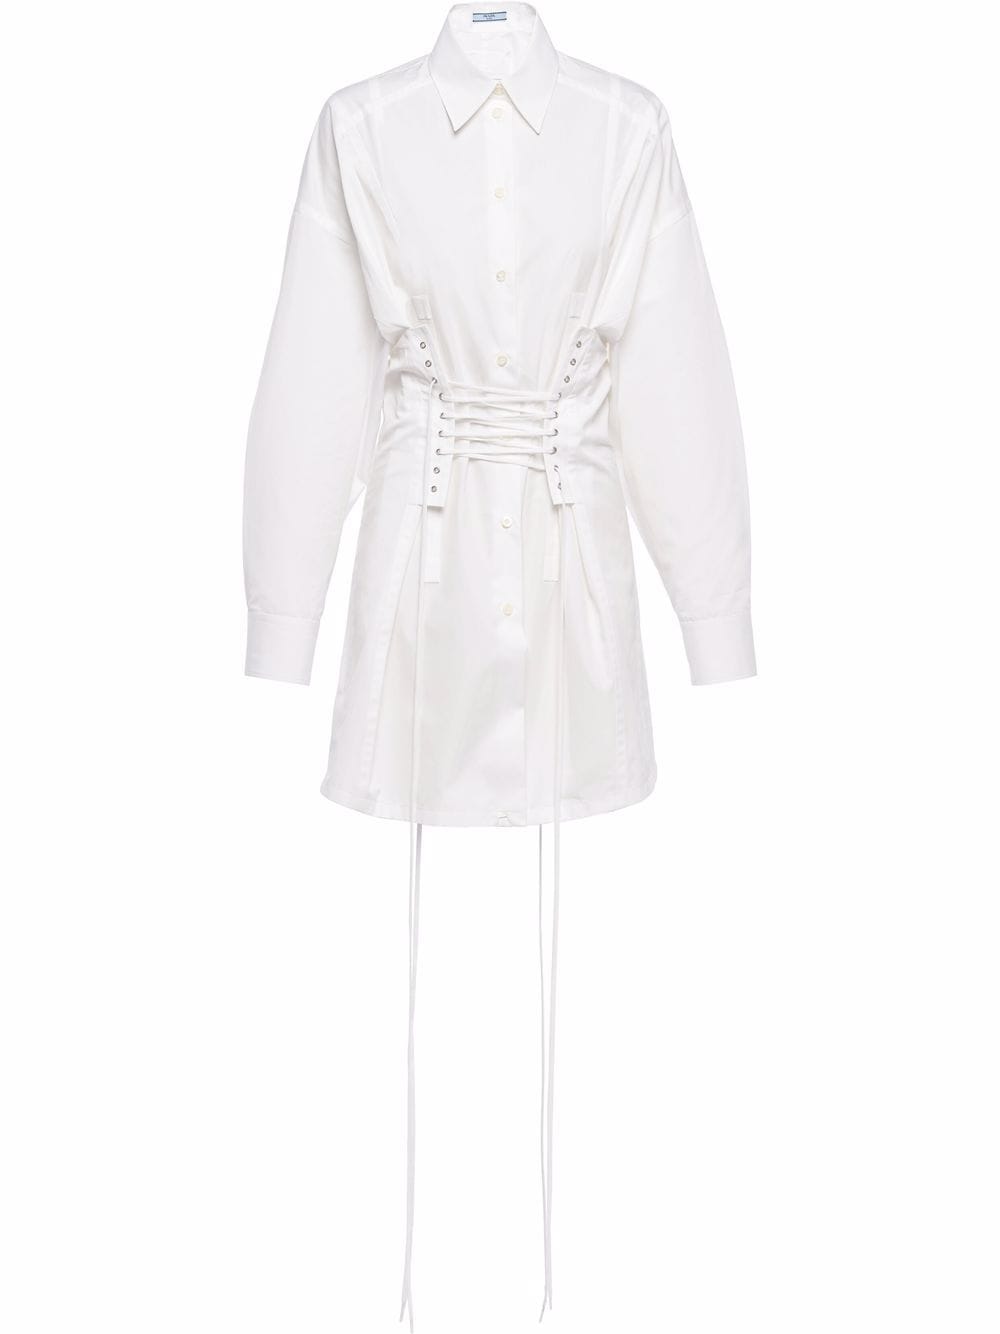 Prada lace-up shirt dress - White von Prada